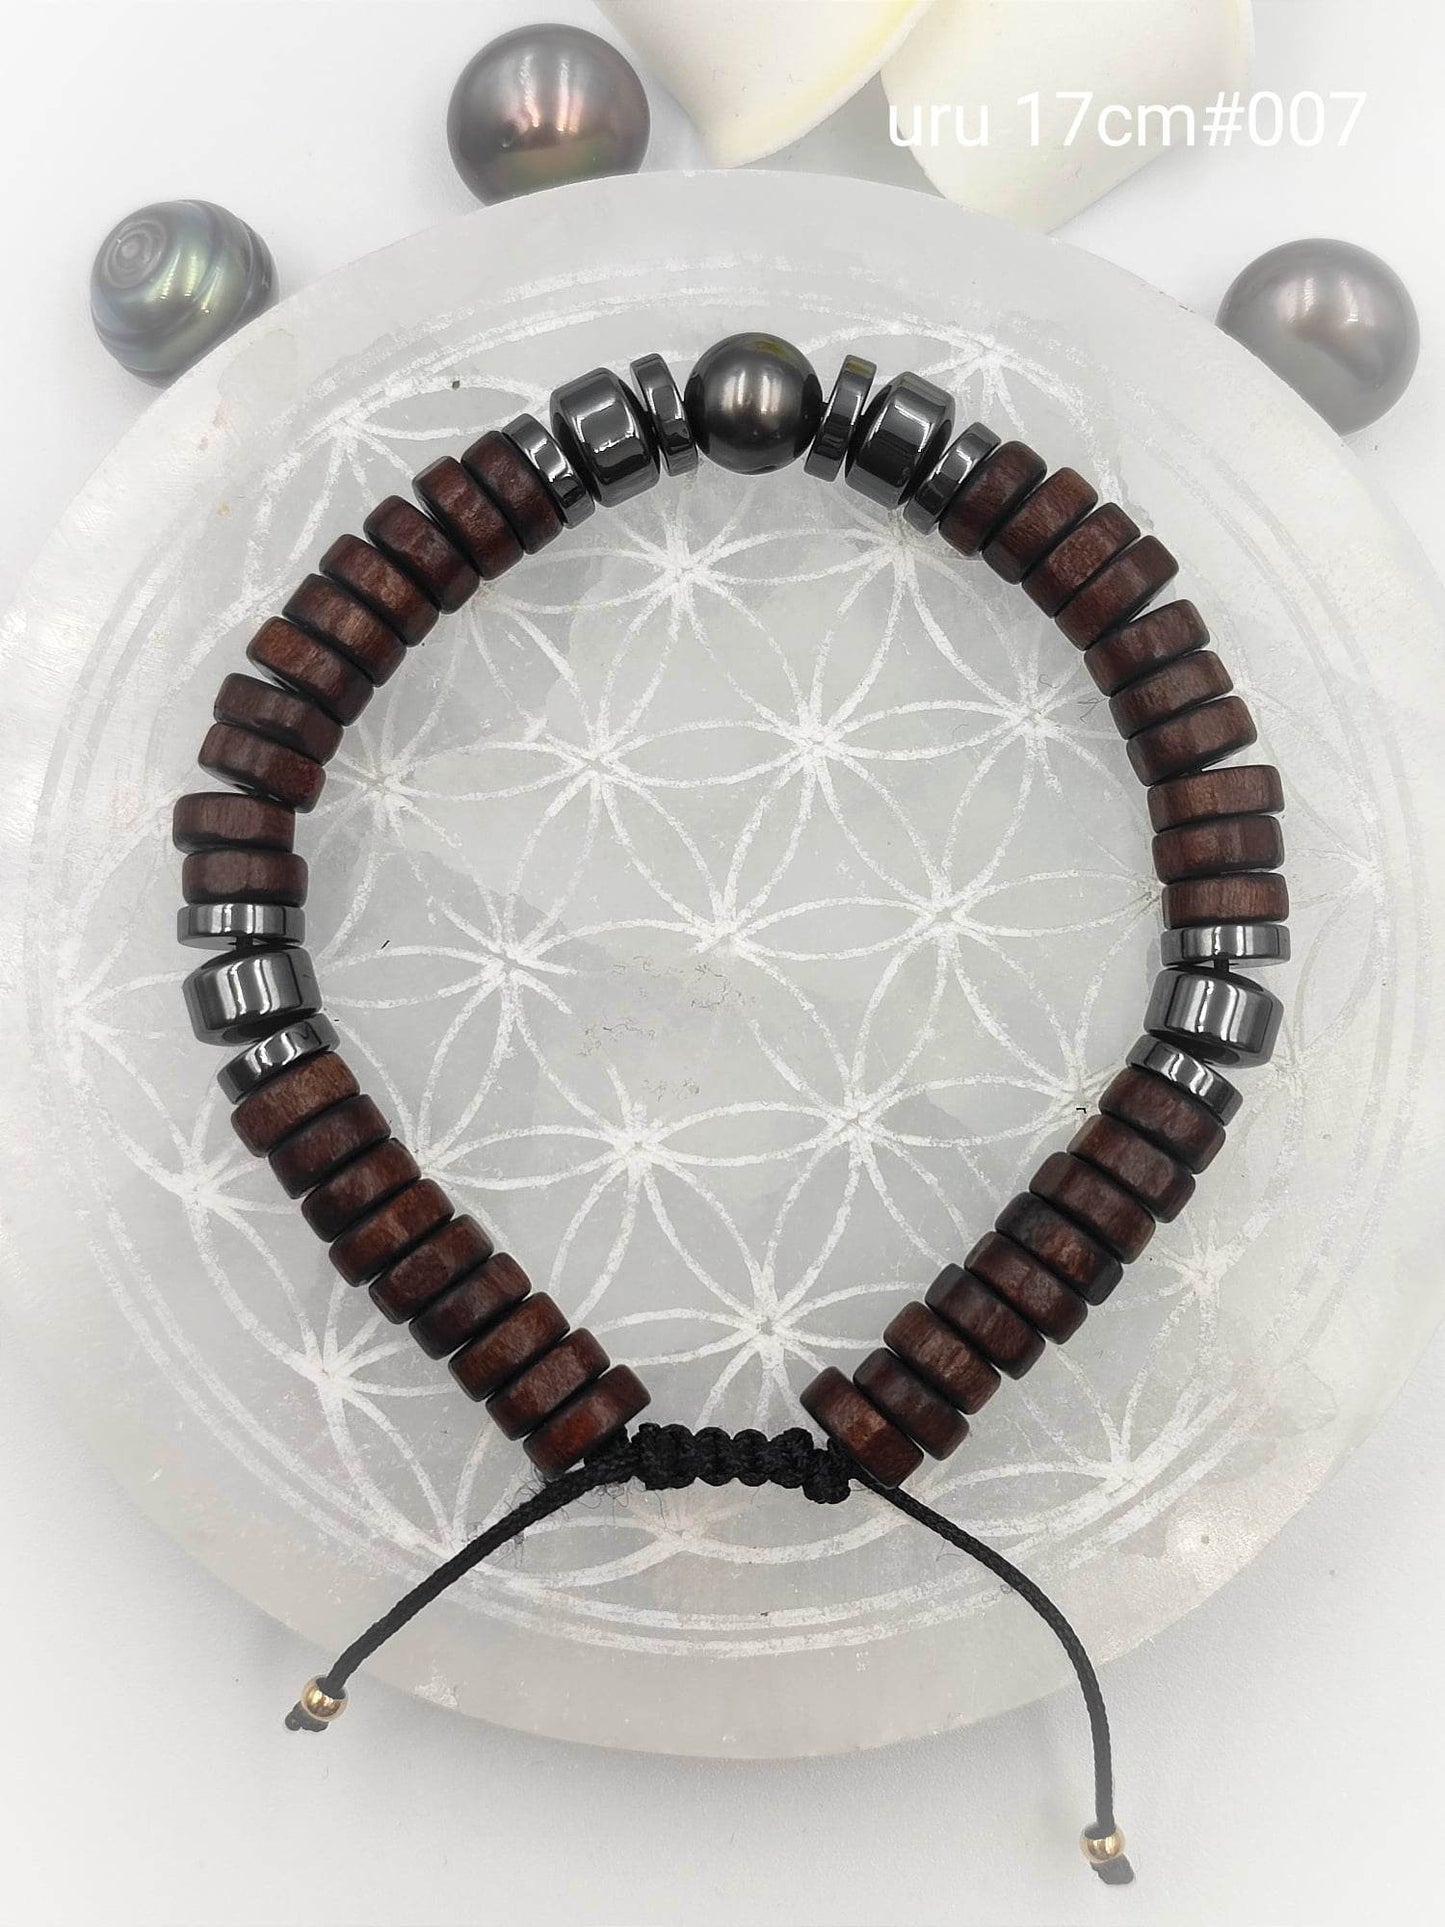 Bracelet homme "'Uru" Perle de Tahiti 17cm #007